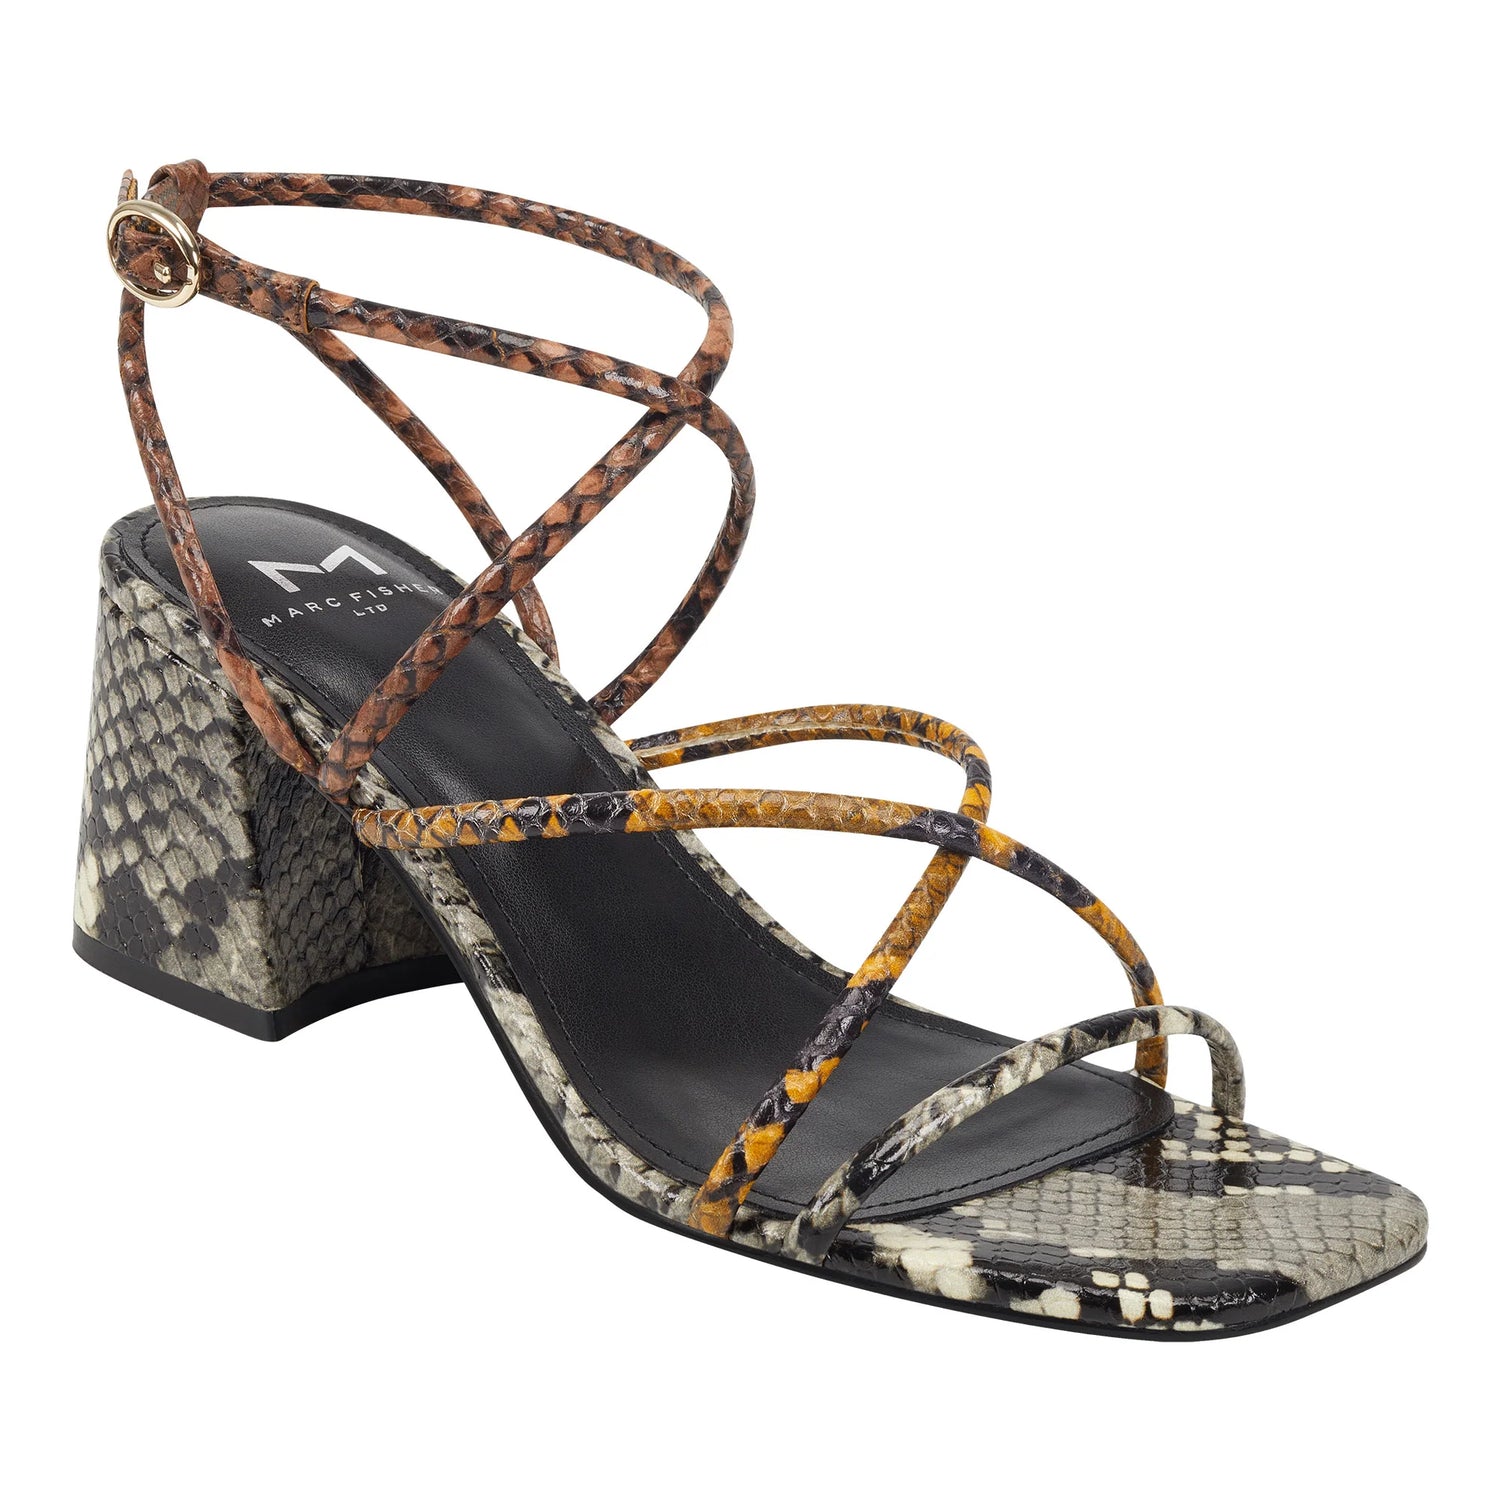 Nakitia Heeled Sandal in Black Multi Texture